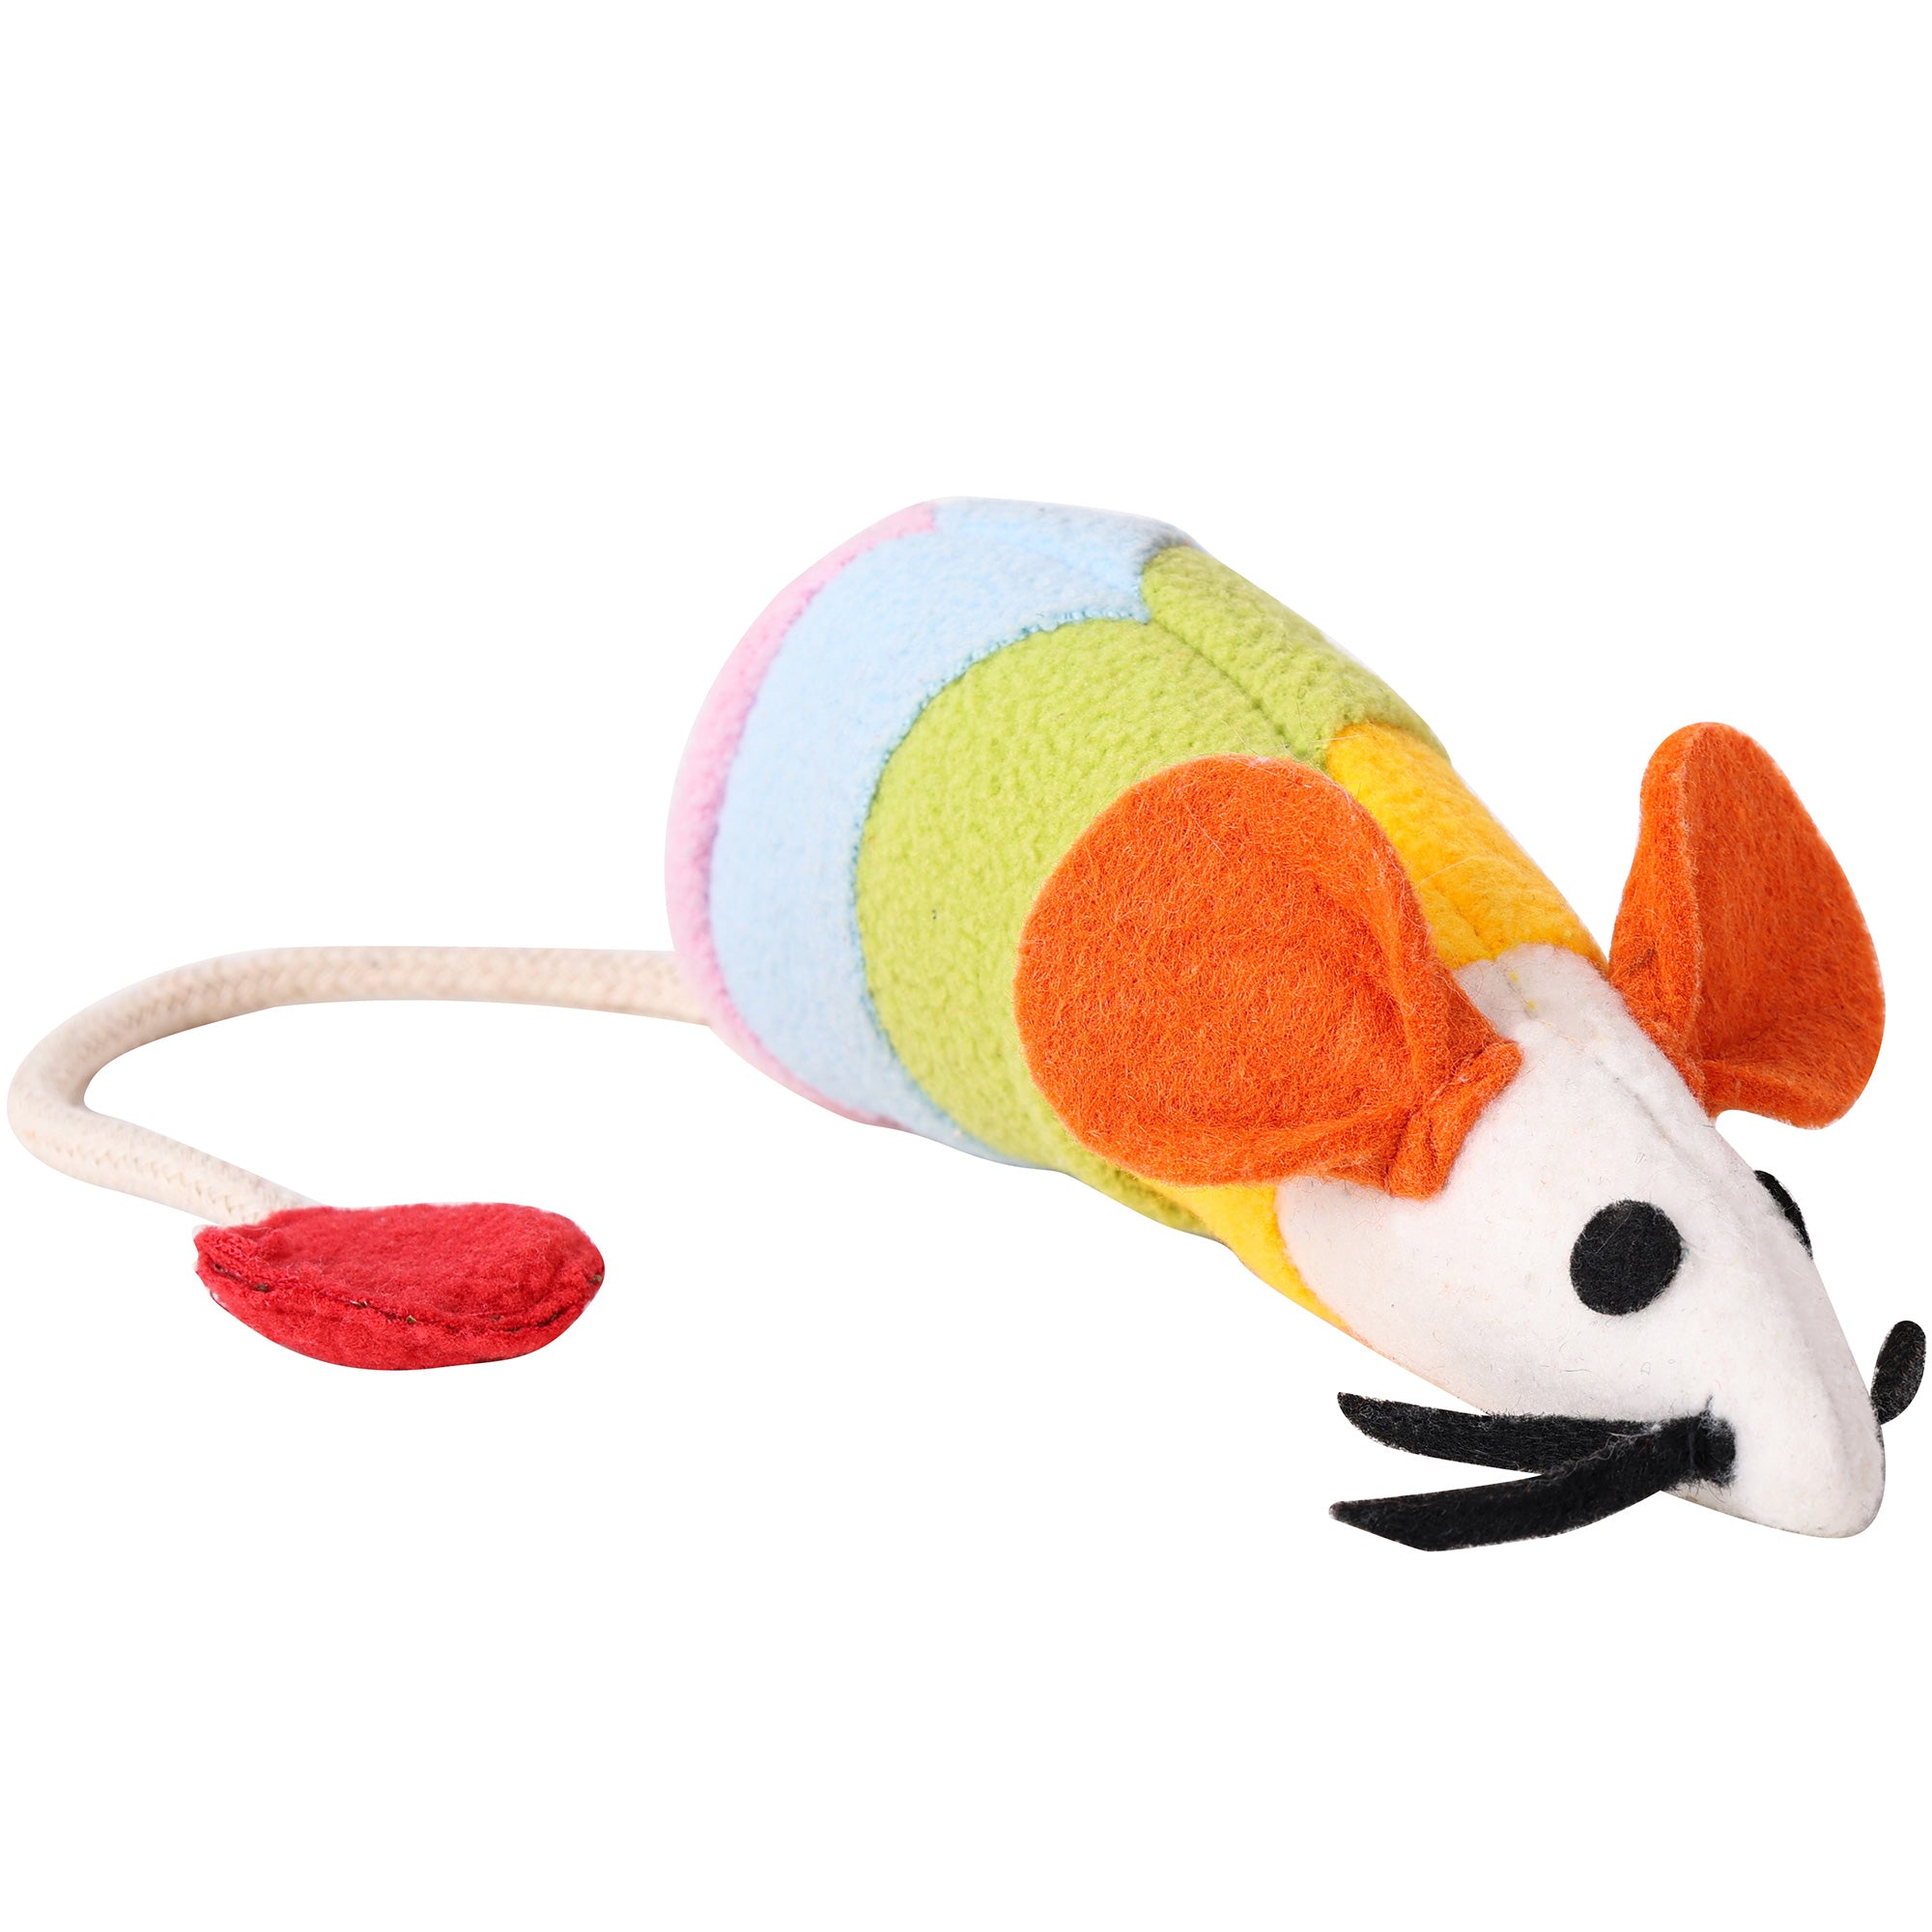 Rainbow Catnip Mouse